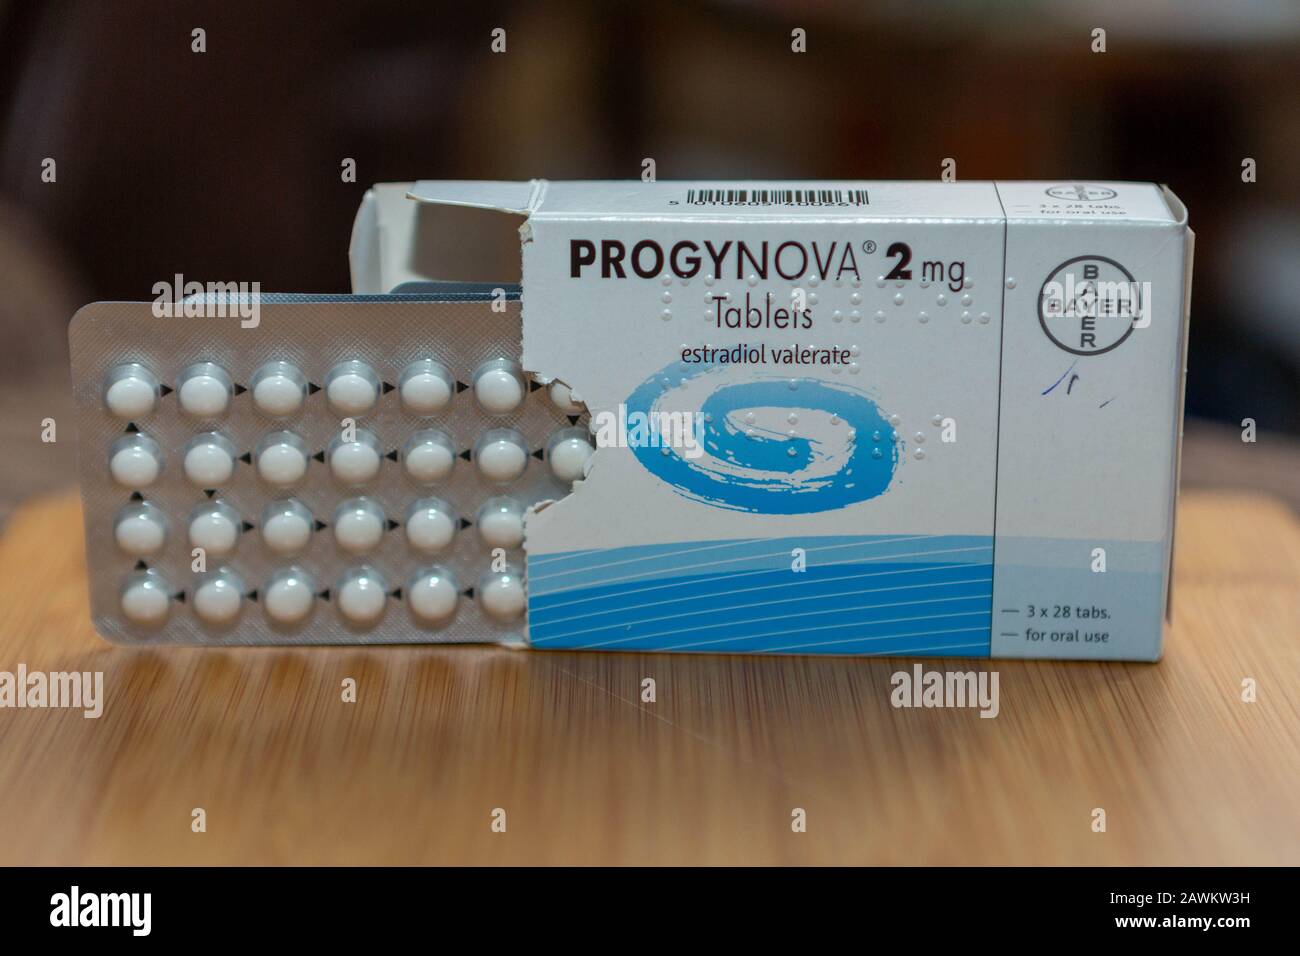 Progynova 2mg Tablets estradiol valerate Stock Photo - Alamy